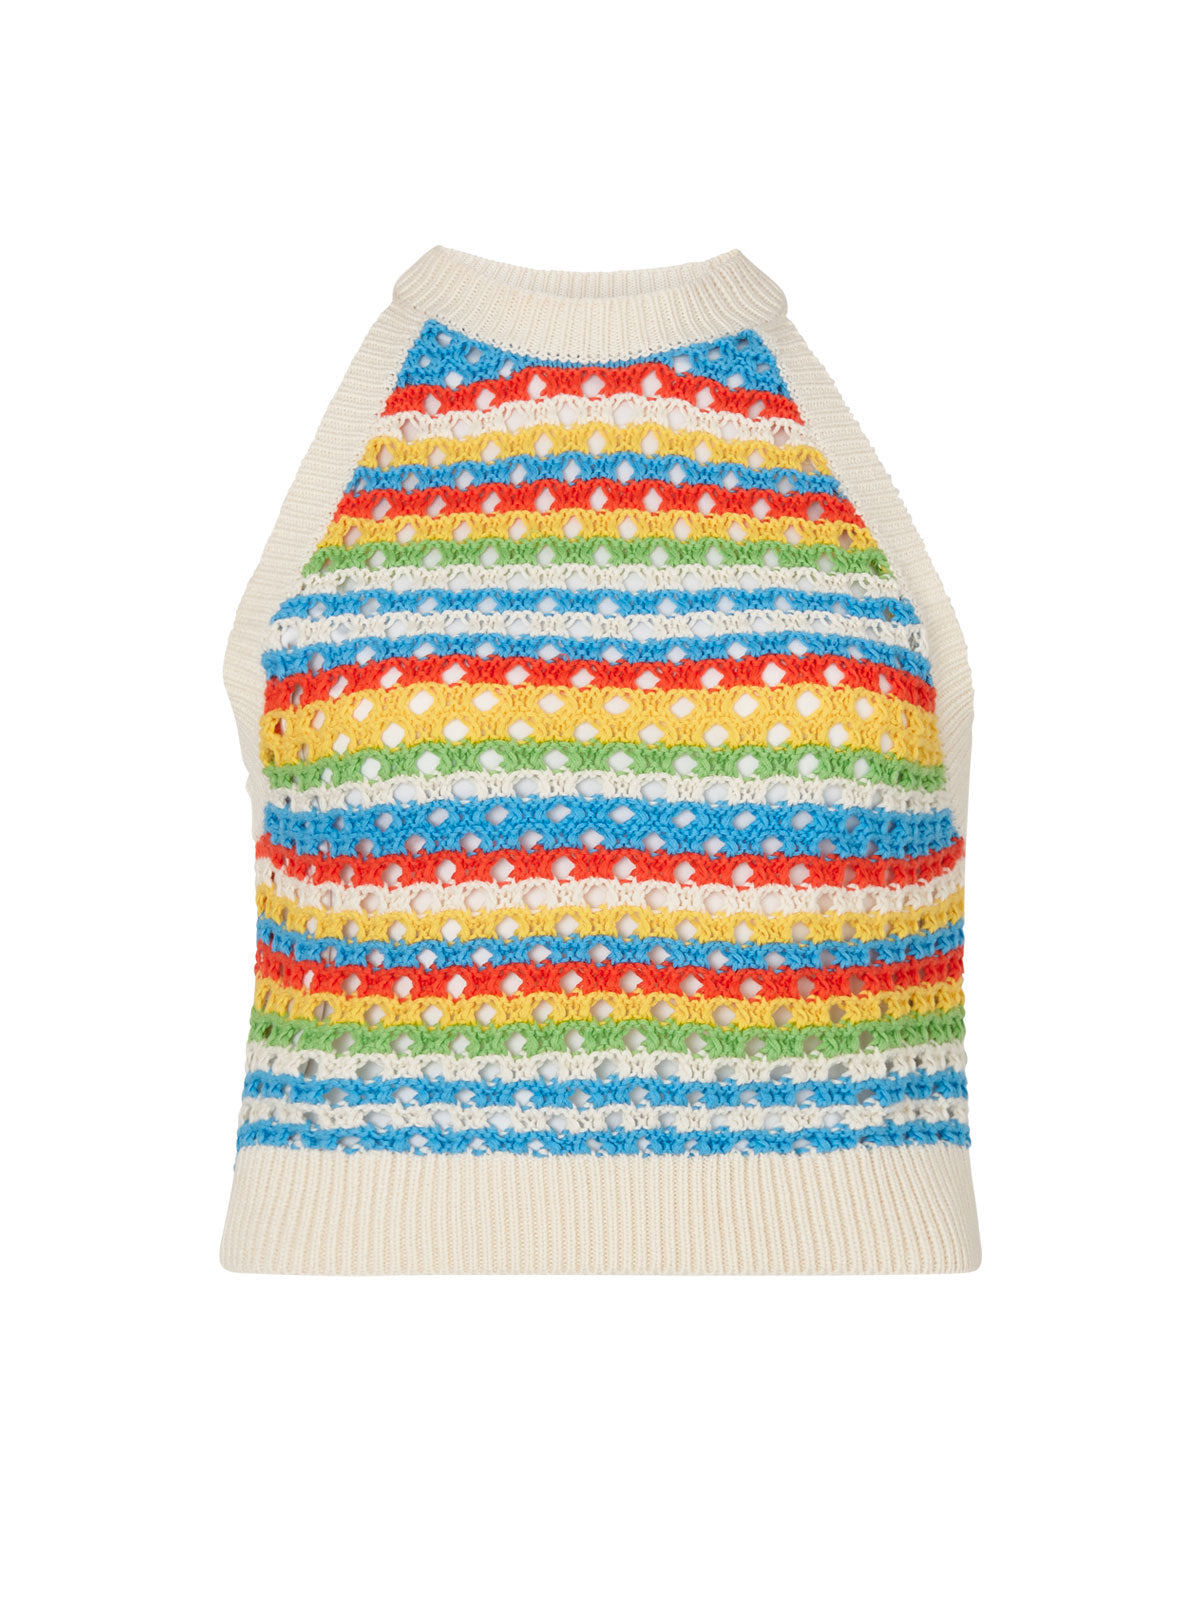 Maddison Blue Stripe Crochet Knit Halter Top By KITRI Studio